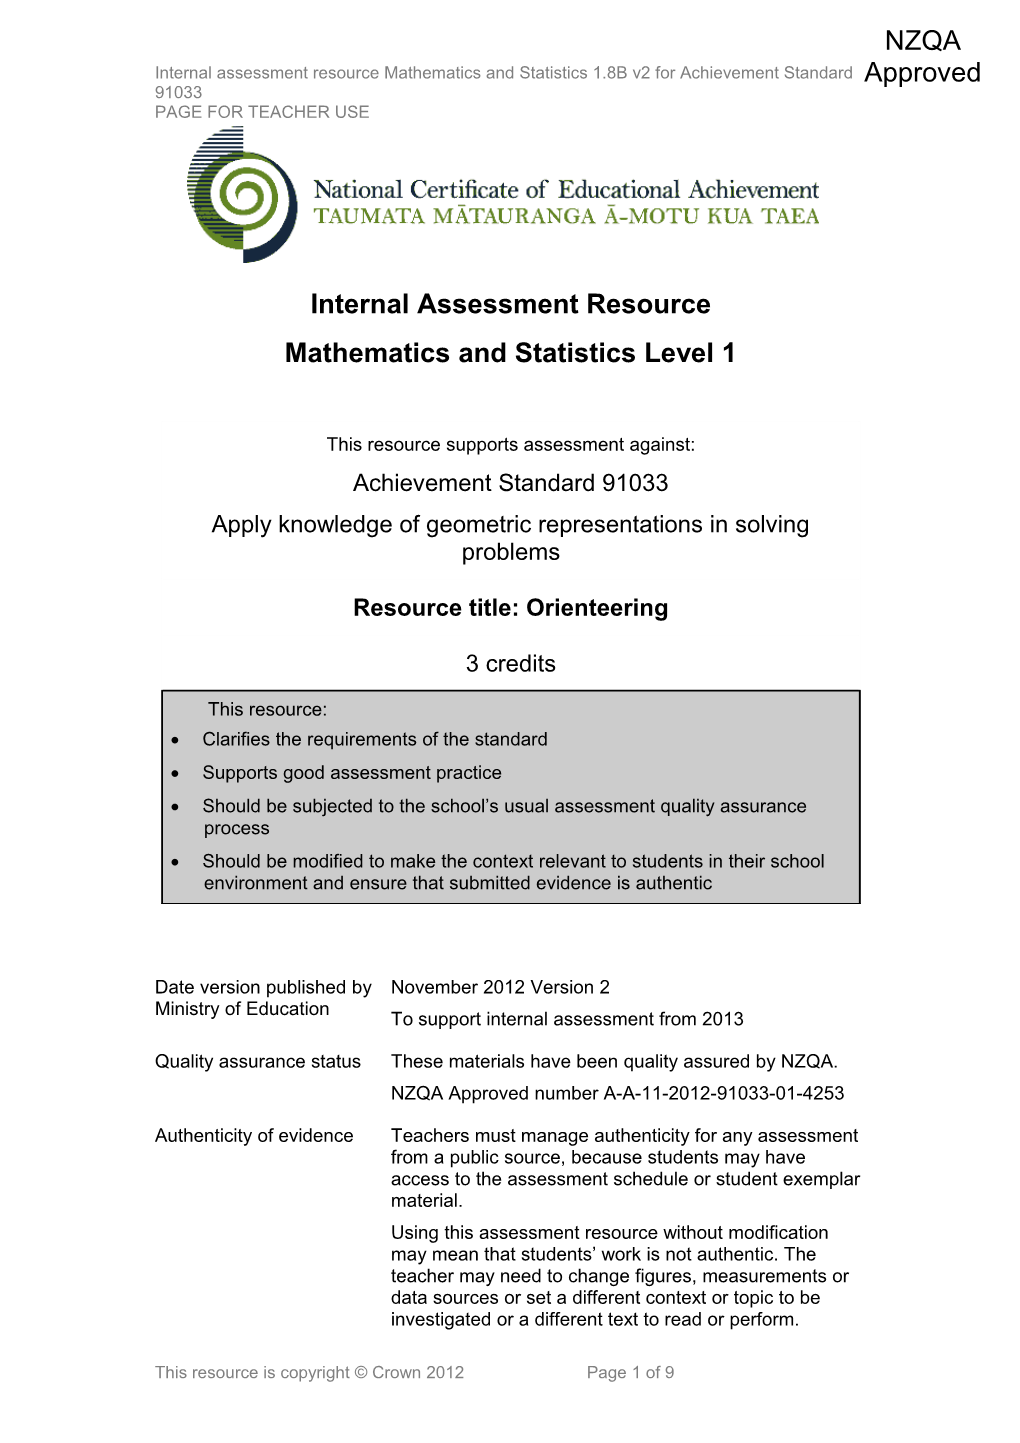 Level 1 Mathematics and Statistics Internal Assessment Resource s1